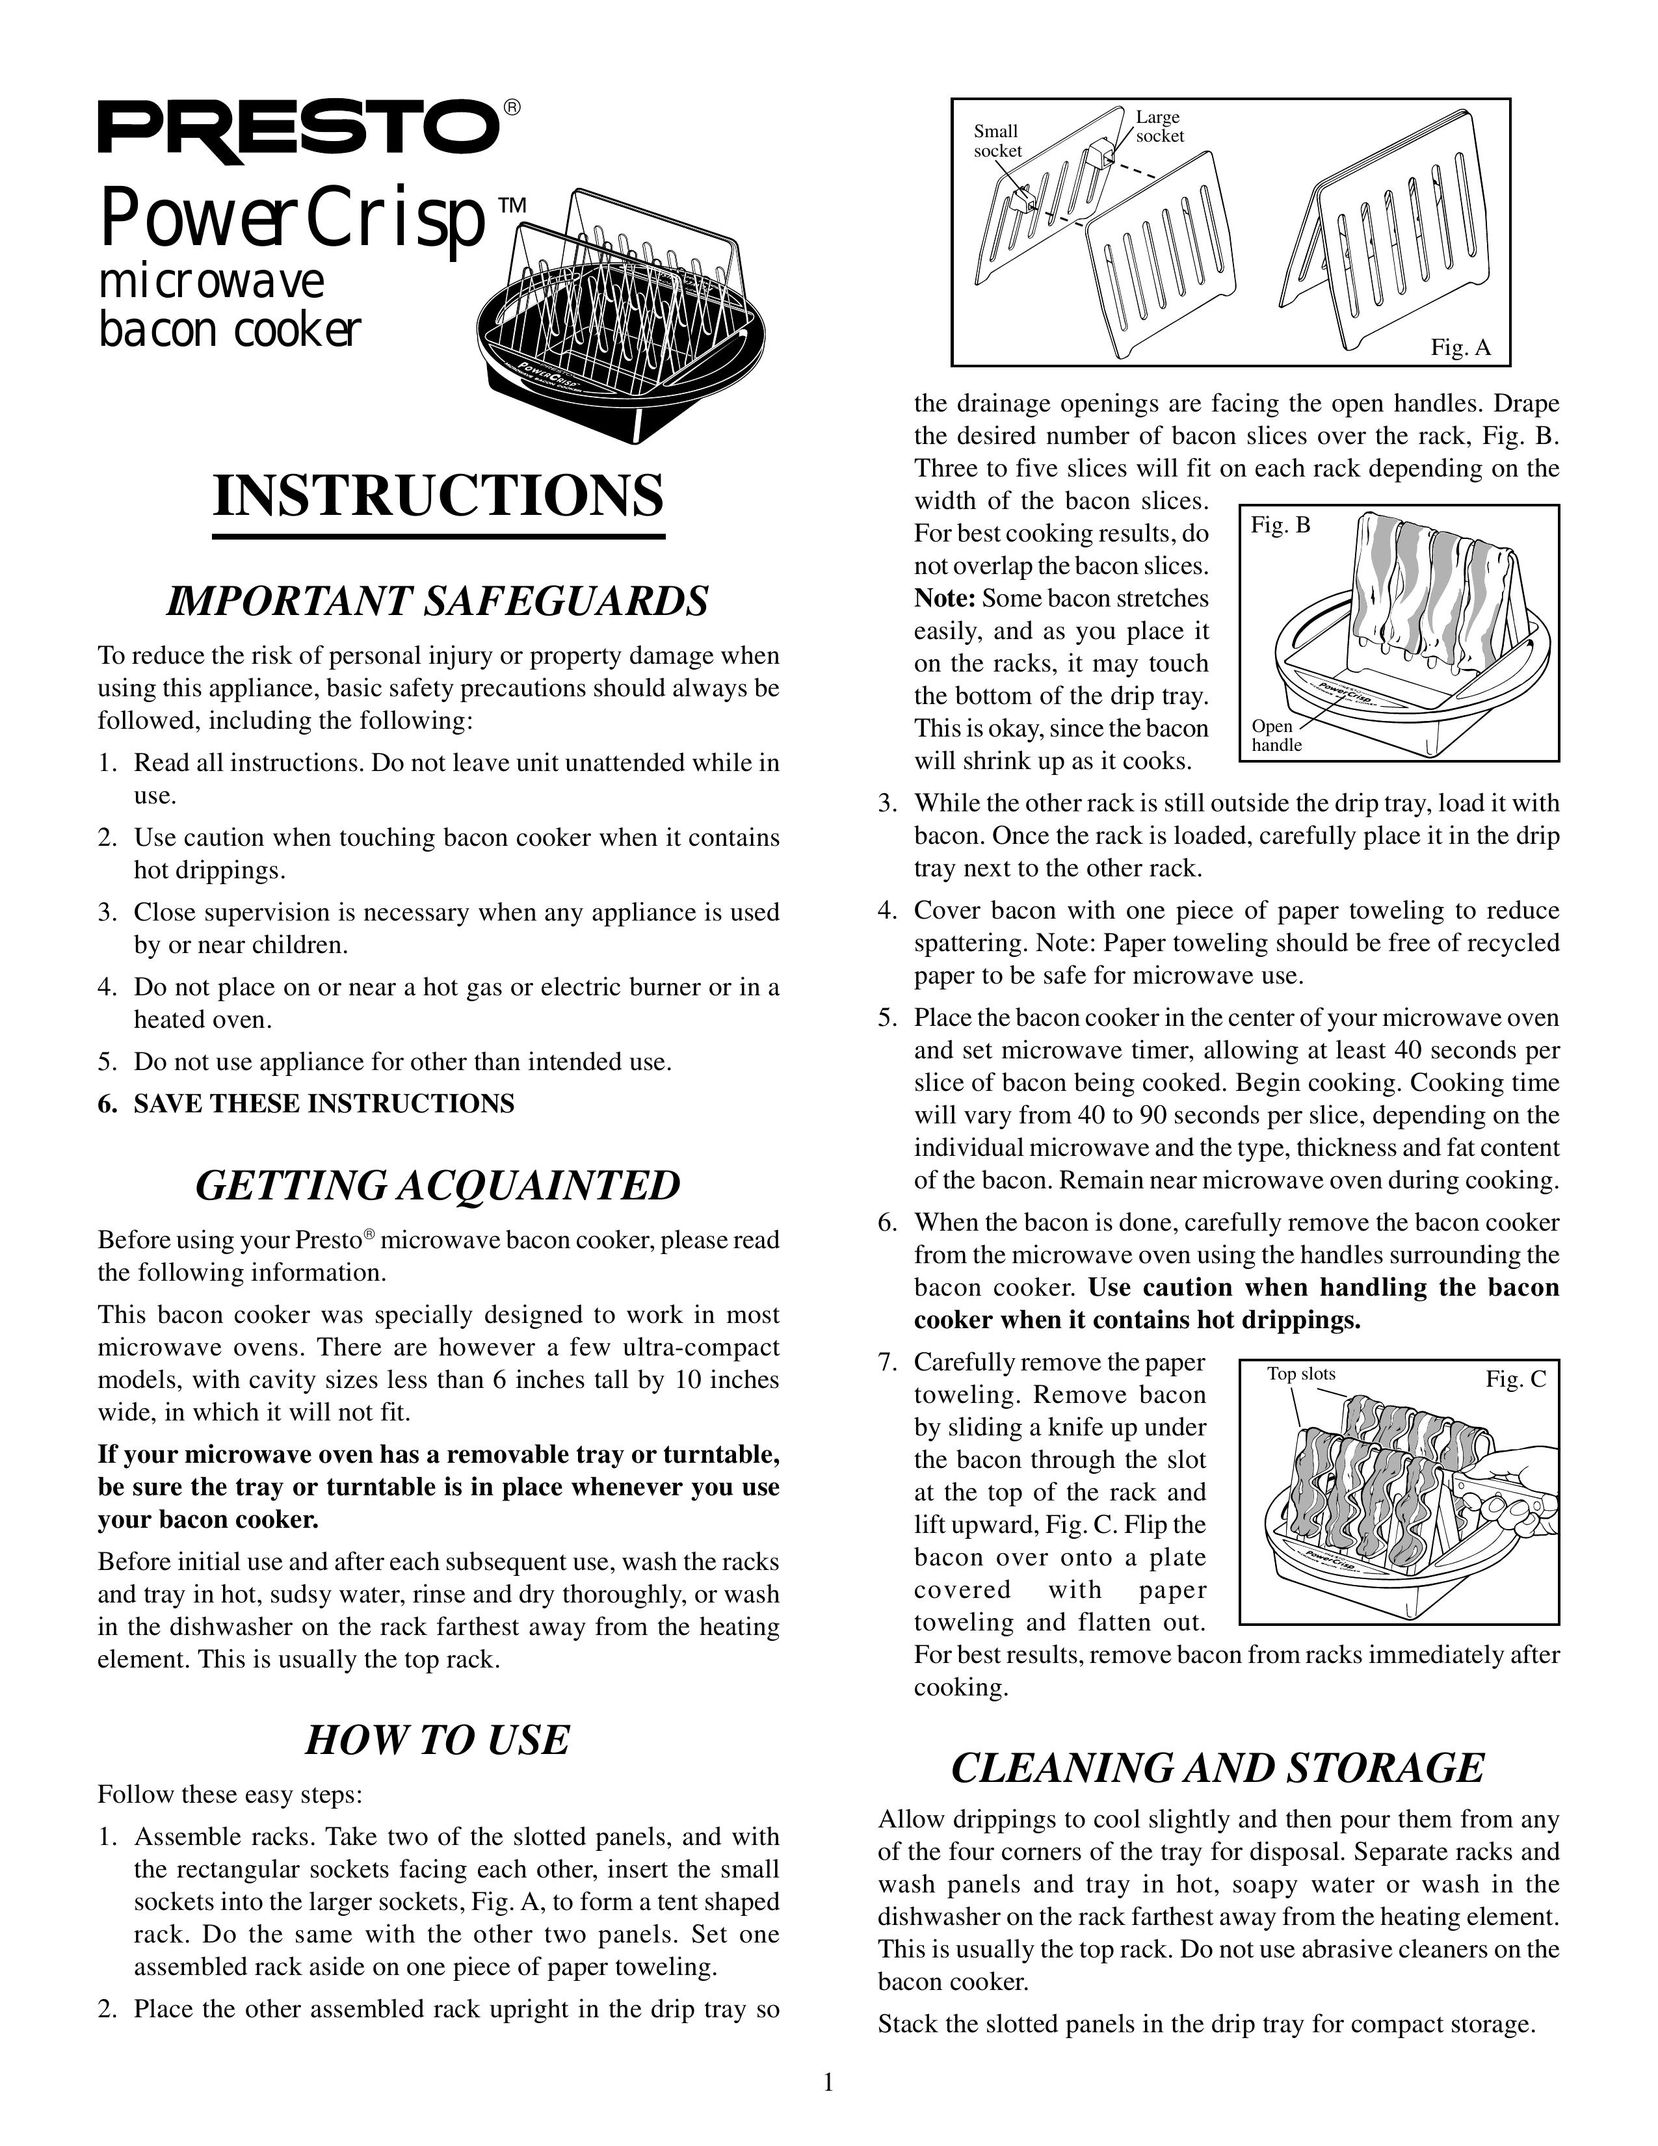 Presto microwave bacon cooker Microwave Oven User Manual